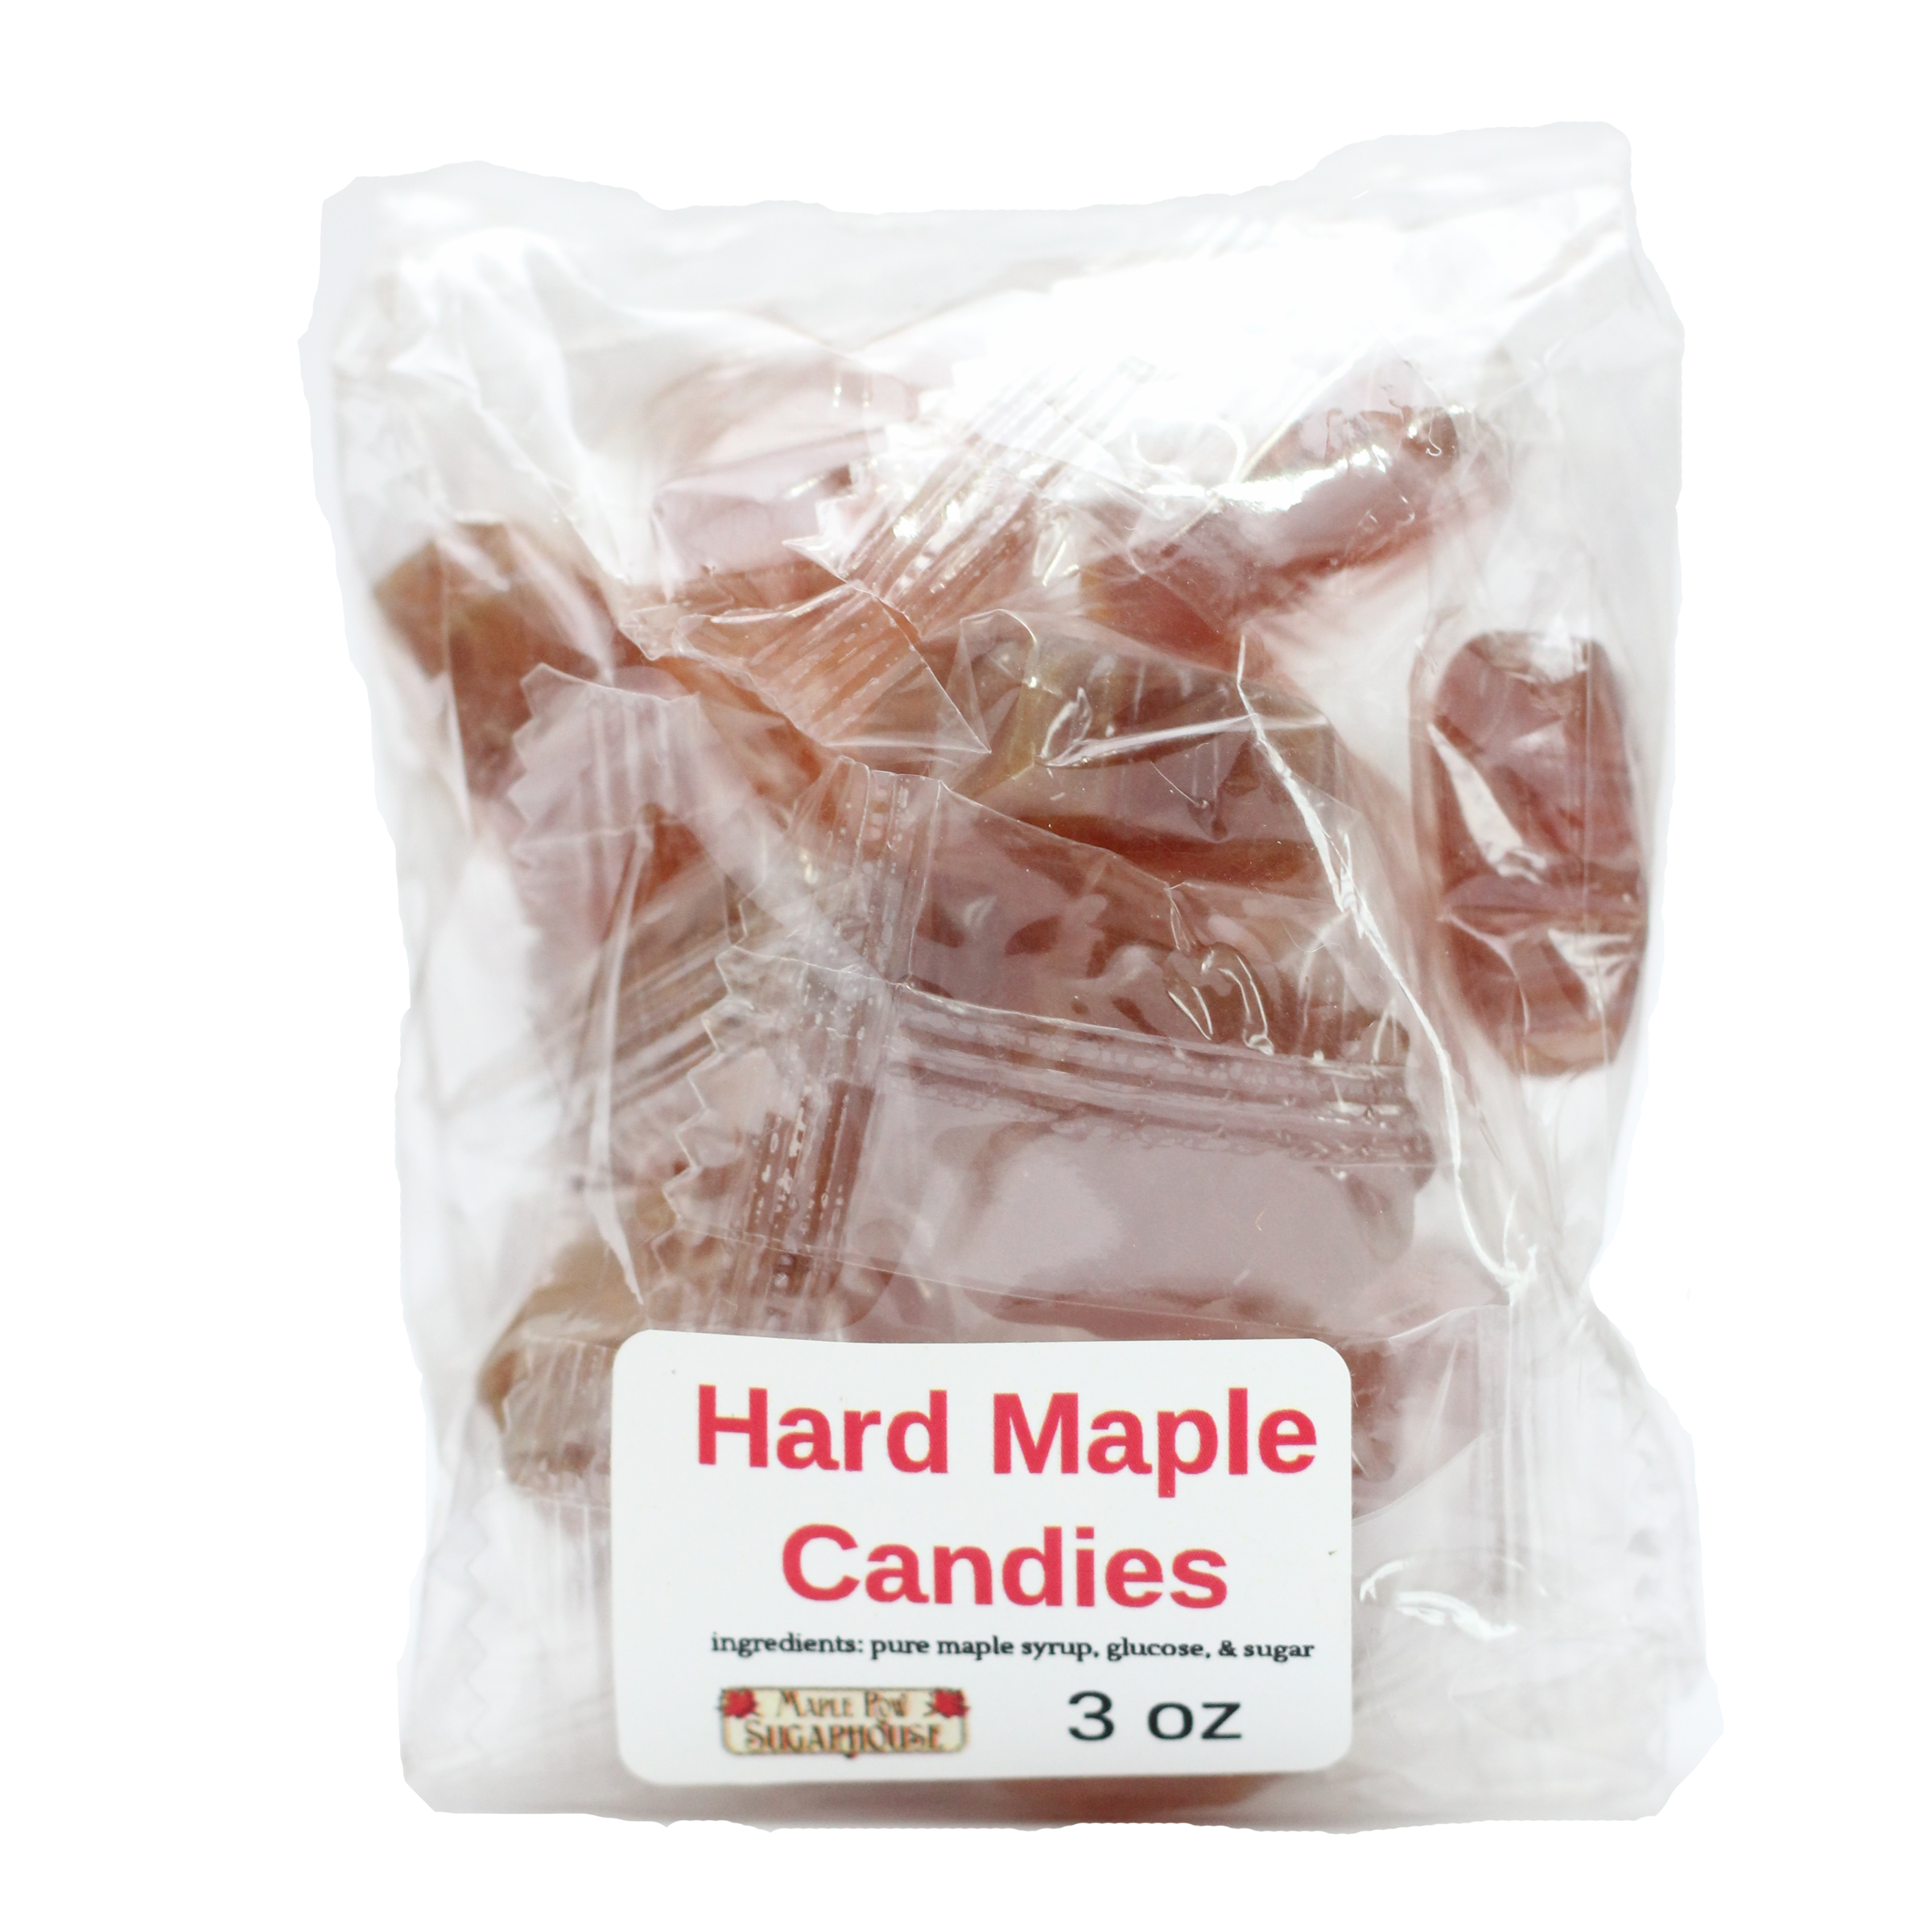 medium hard maple candy